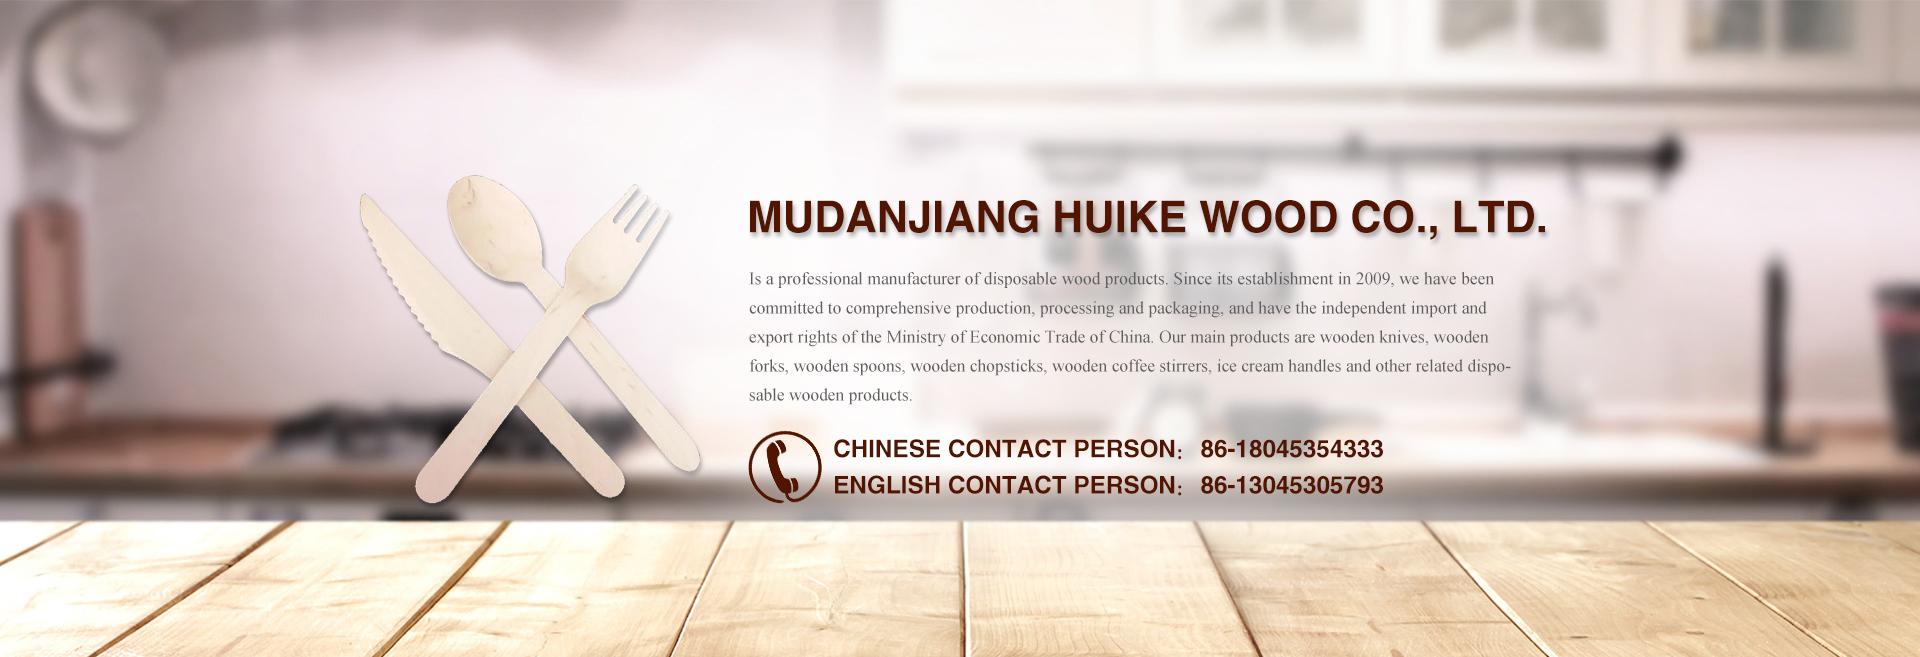 Mudanjiang Huike Wood Co Ltd, North American Hardwood Flooring Company Profile